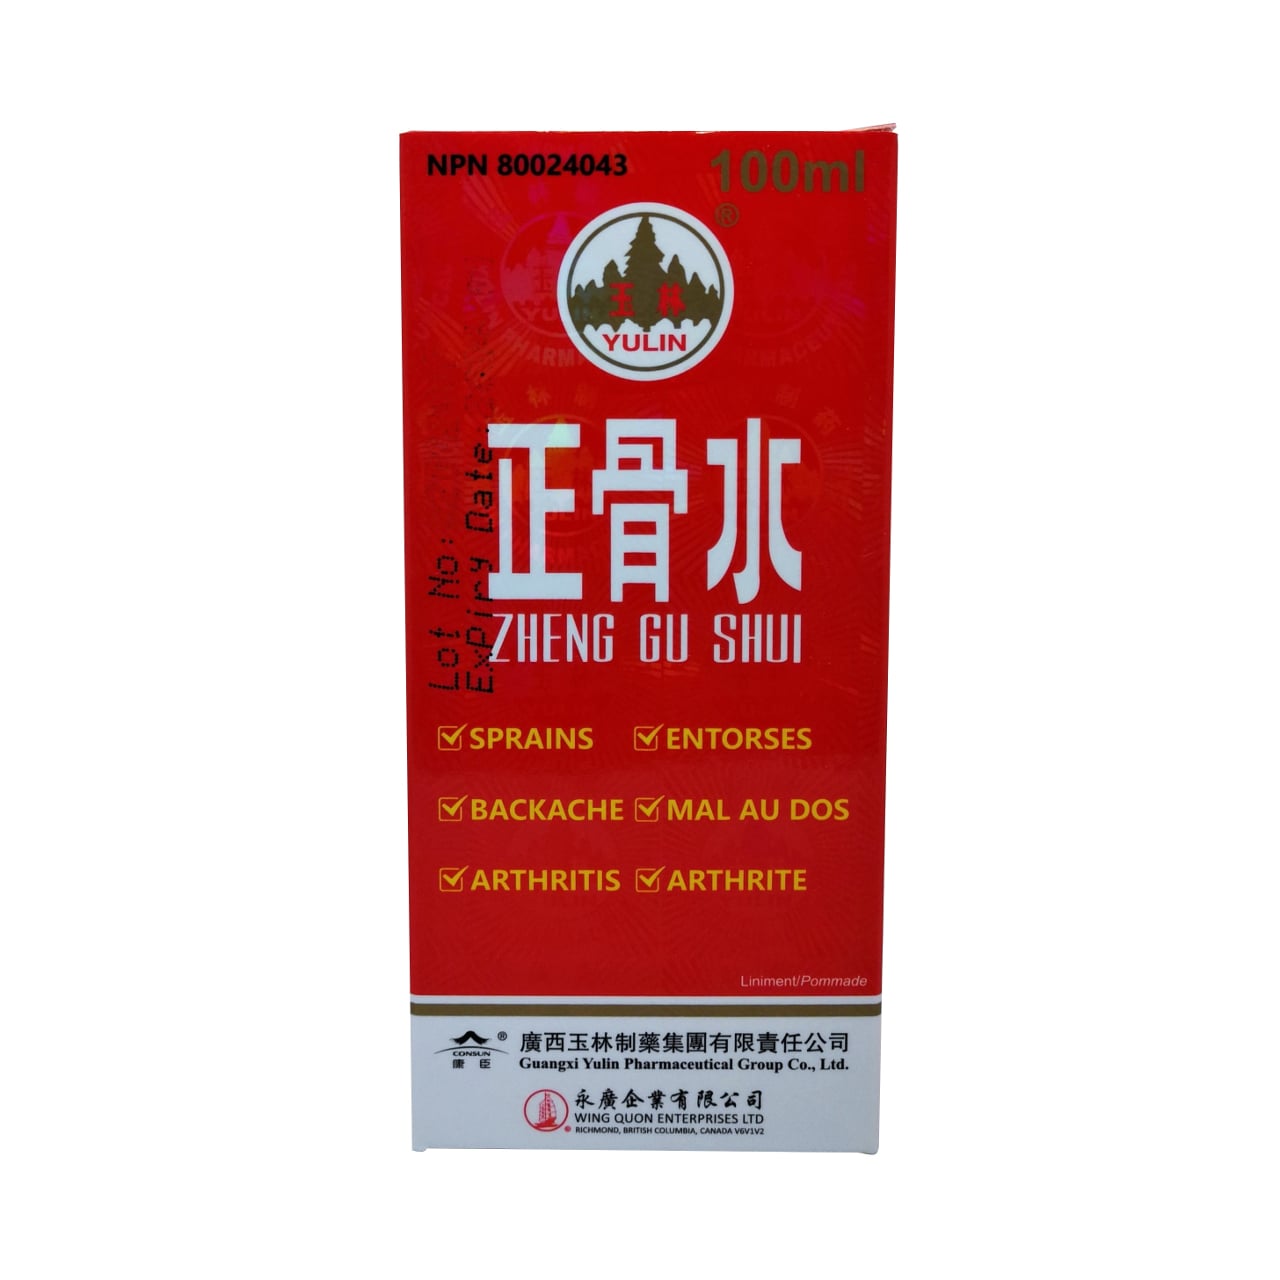 Product label for Yulin Zheng Gu Shui Pain Relief Liniment